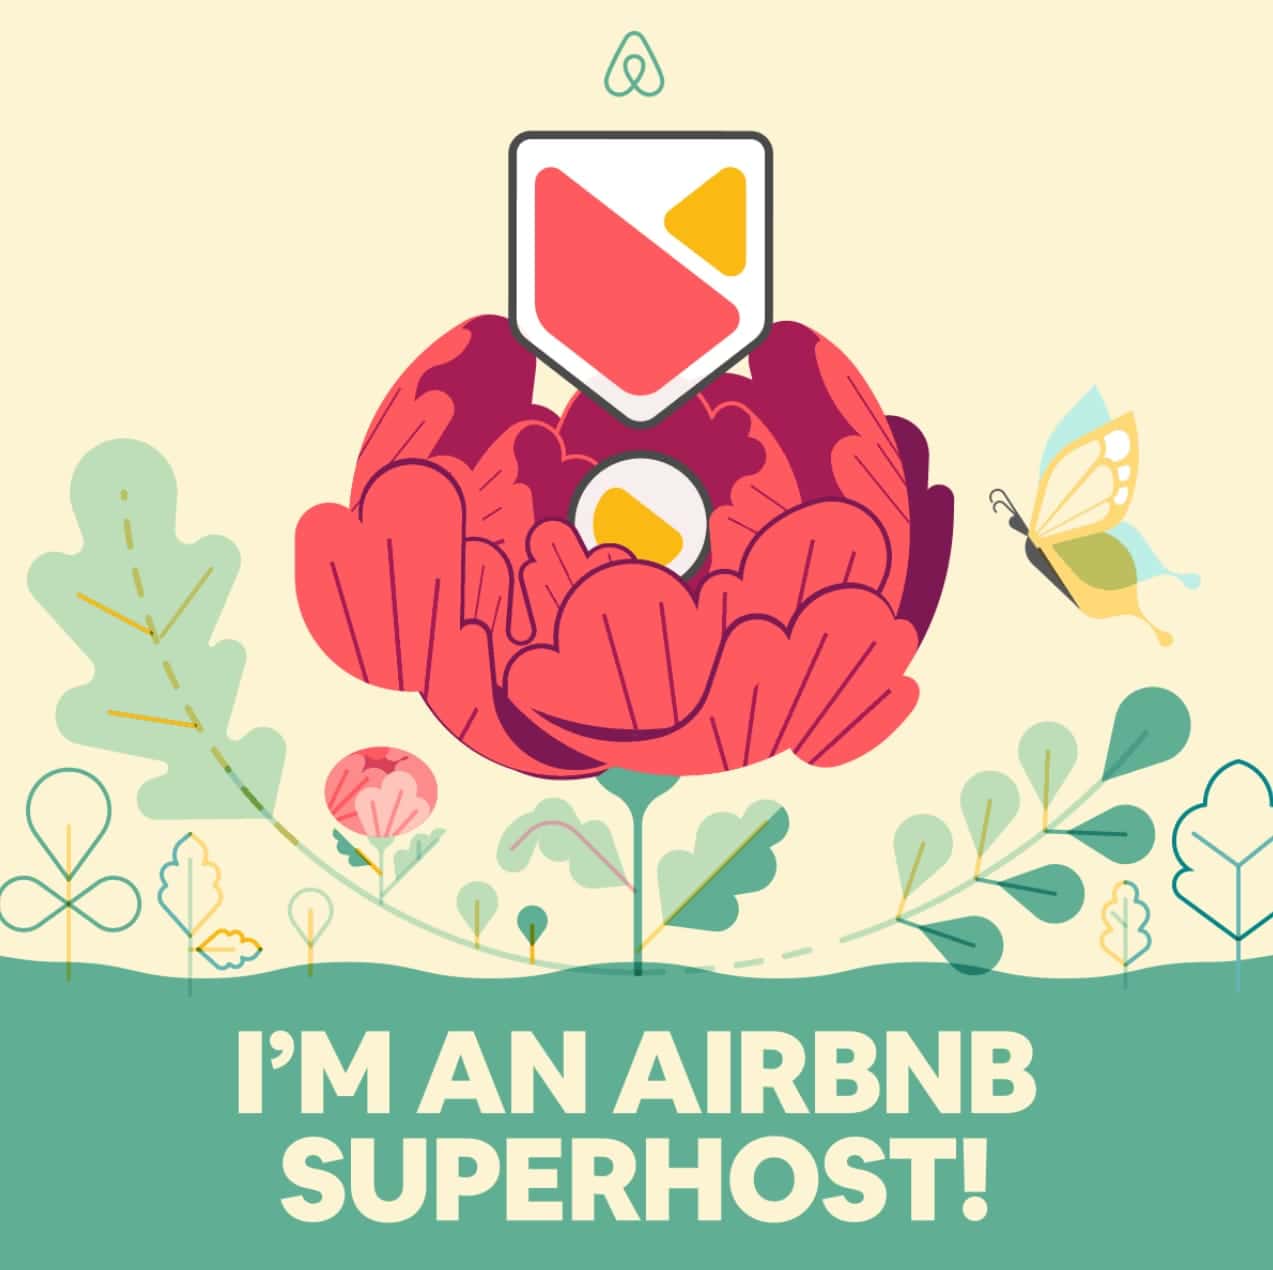 Airbnb Superhost Image